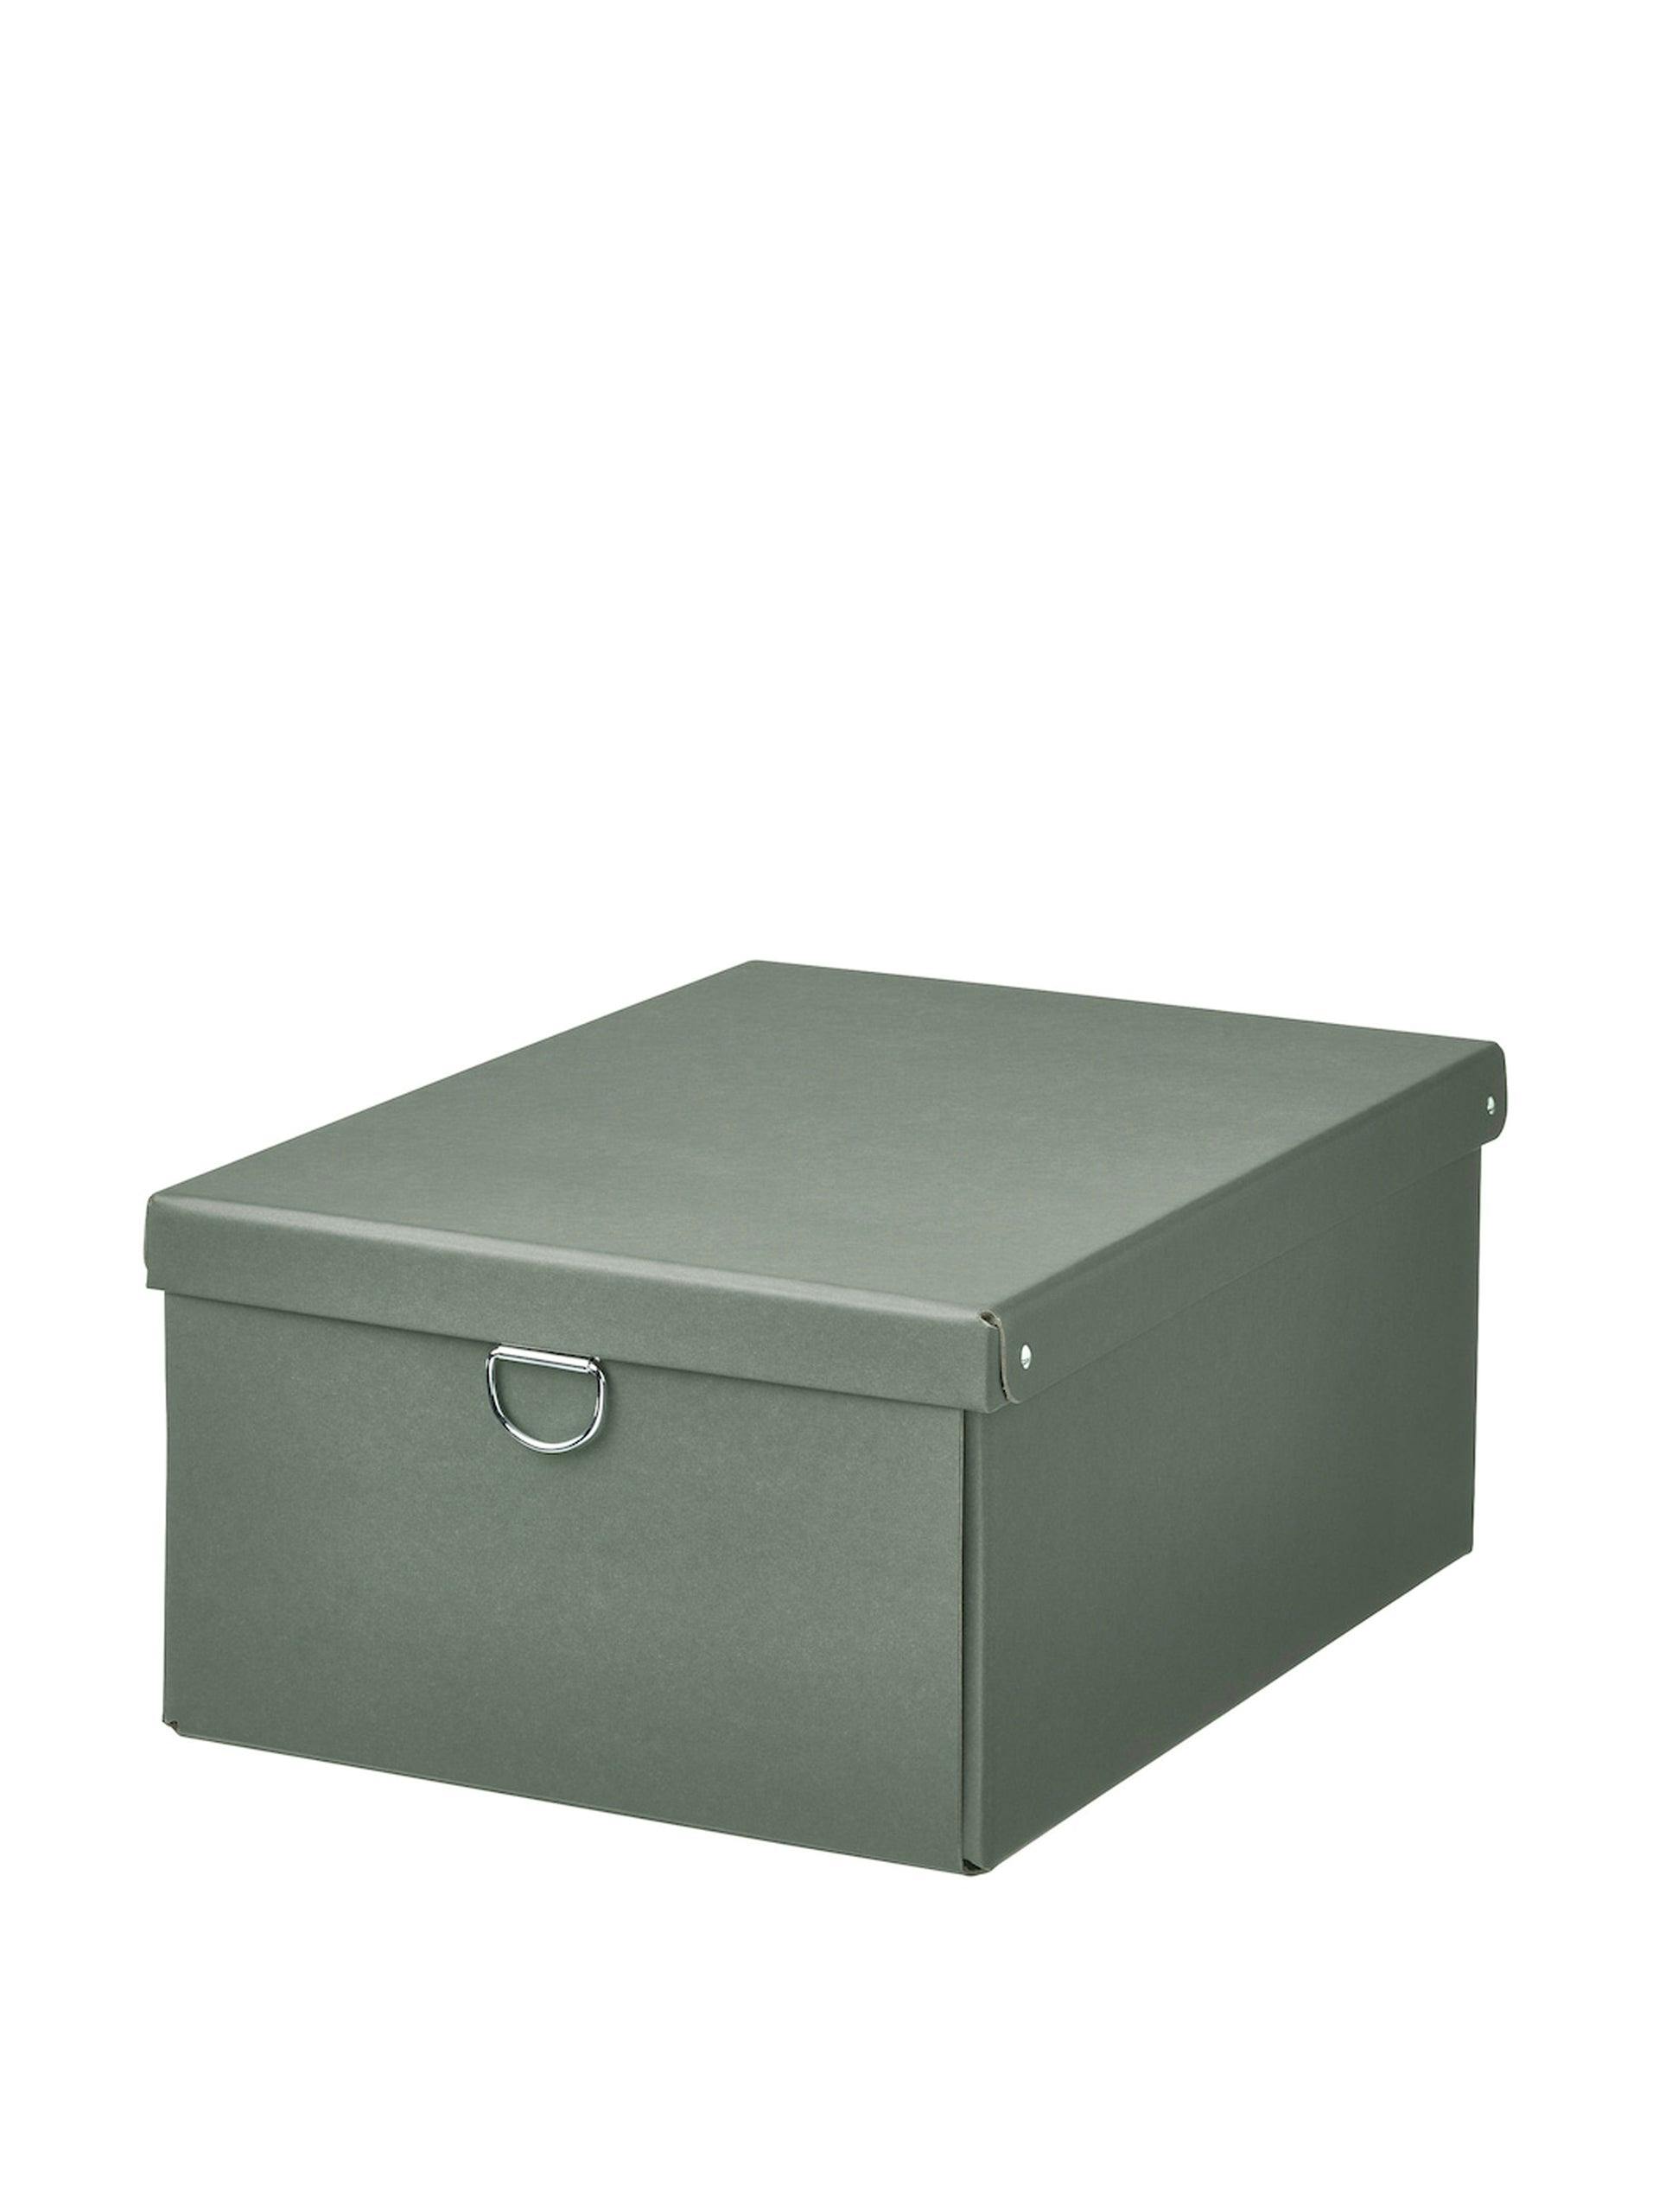 Green storage box